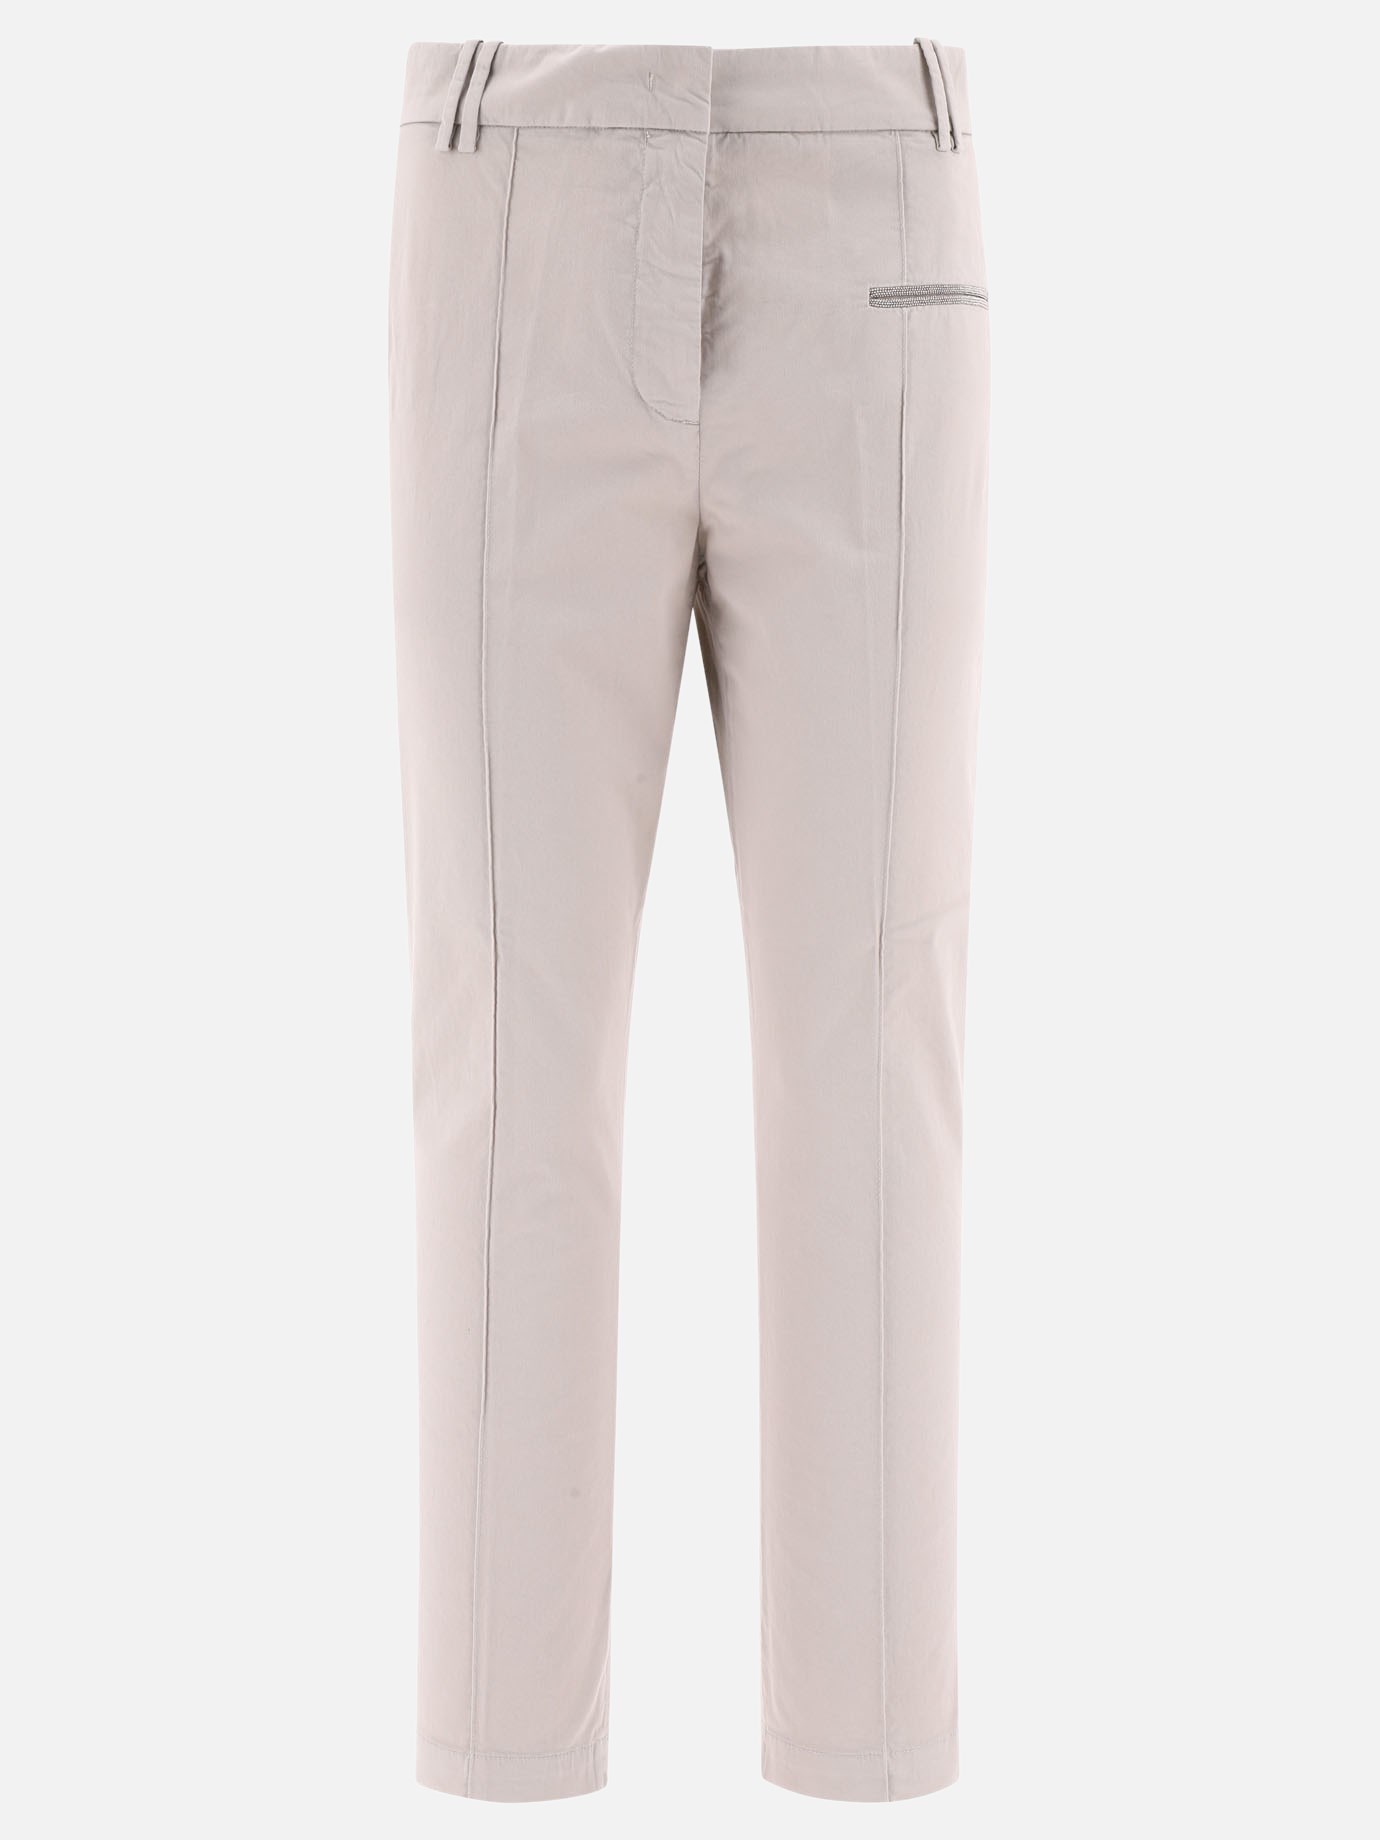 Trousers featuring double welt pocketby Fabiana Filippi - 1